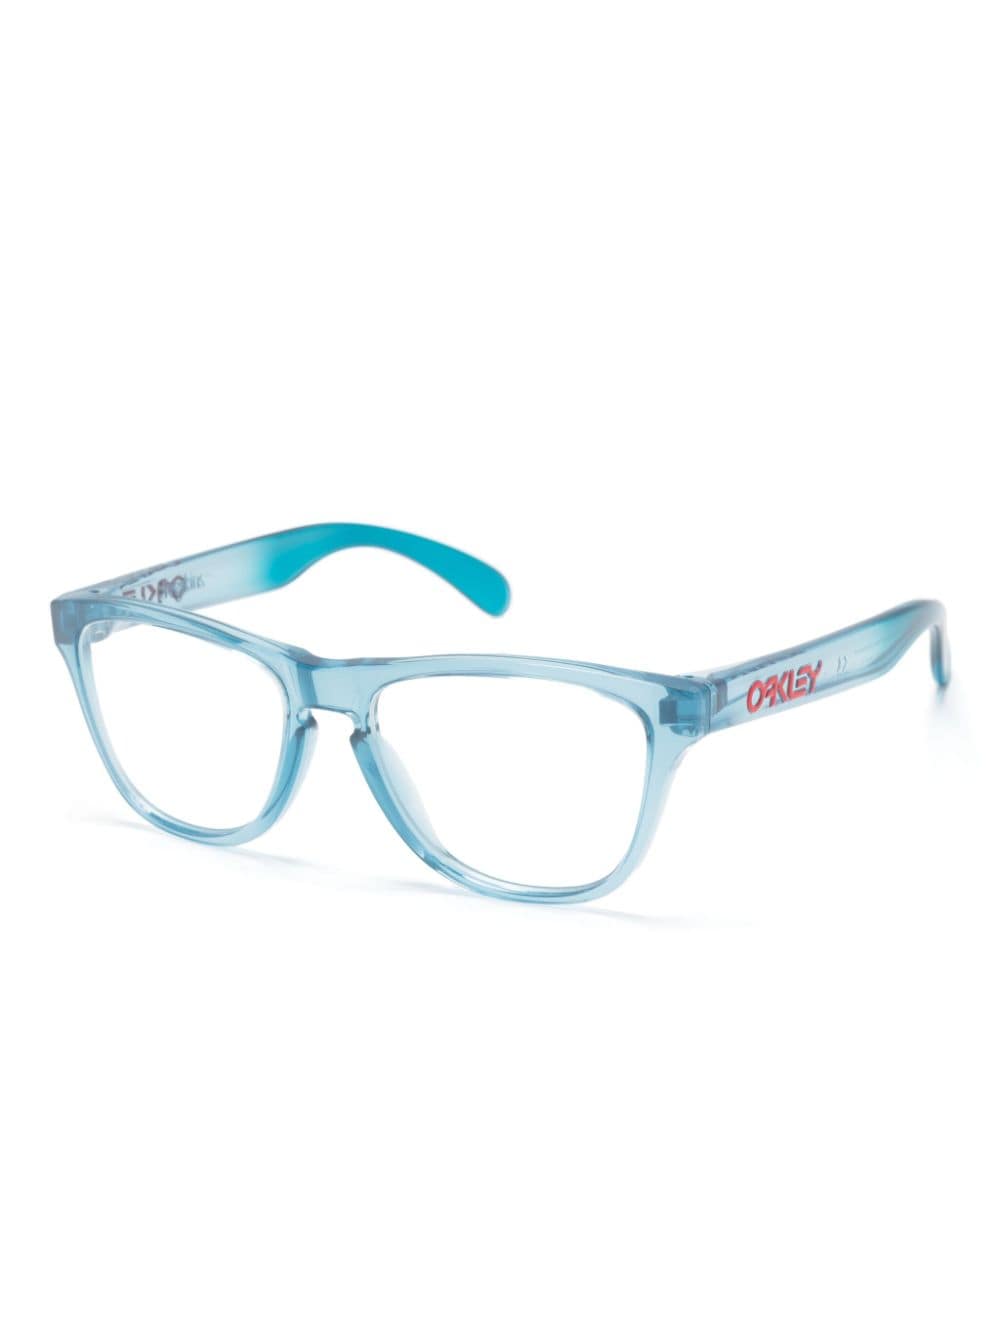 Oakley Rx Frogskins bril met vierkant montuur Blauw